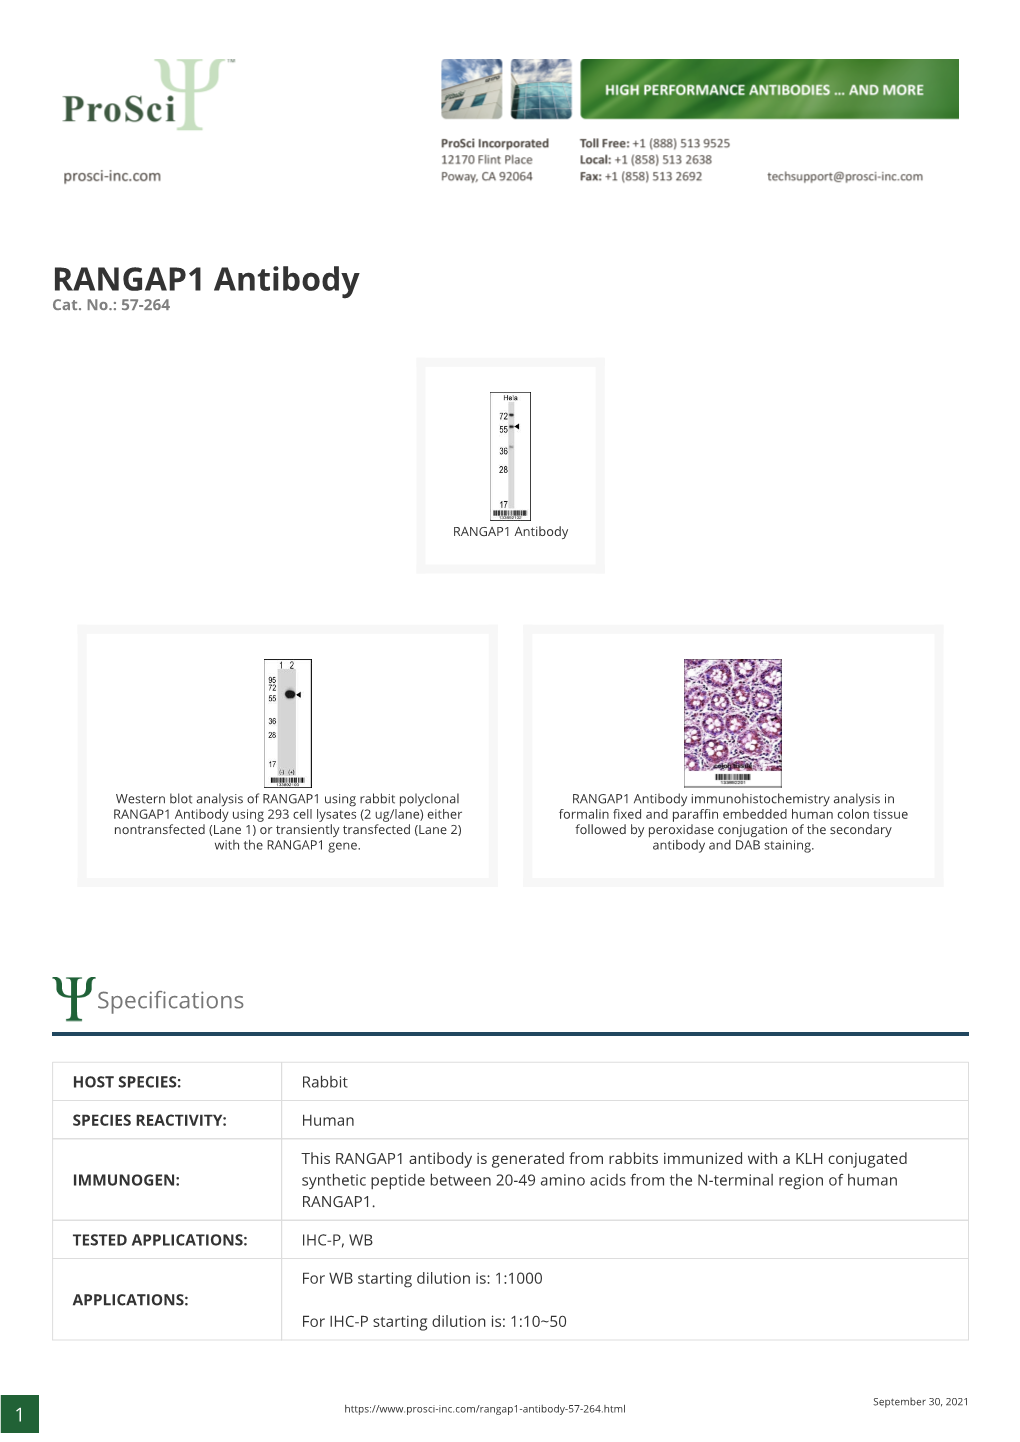 RANGAP1 Antibody Cat